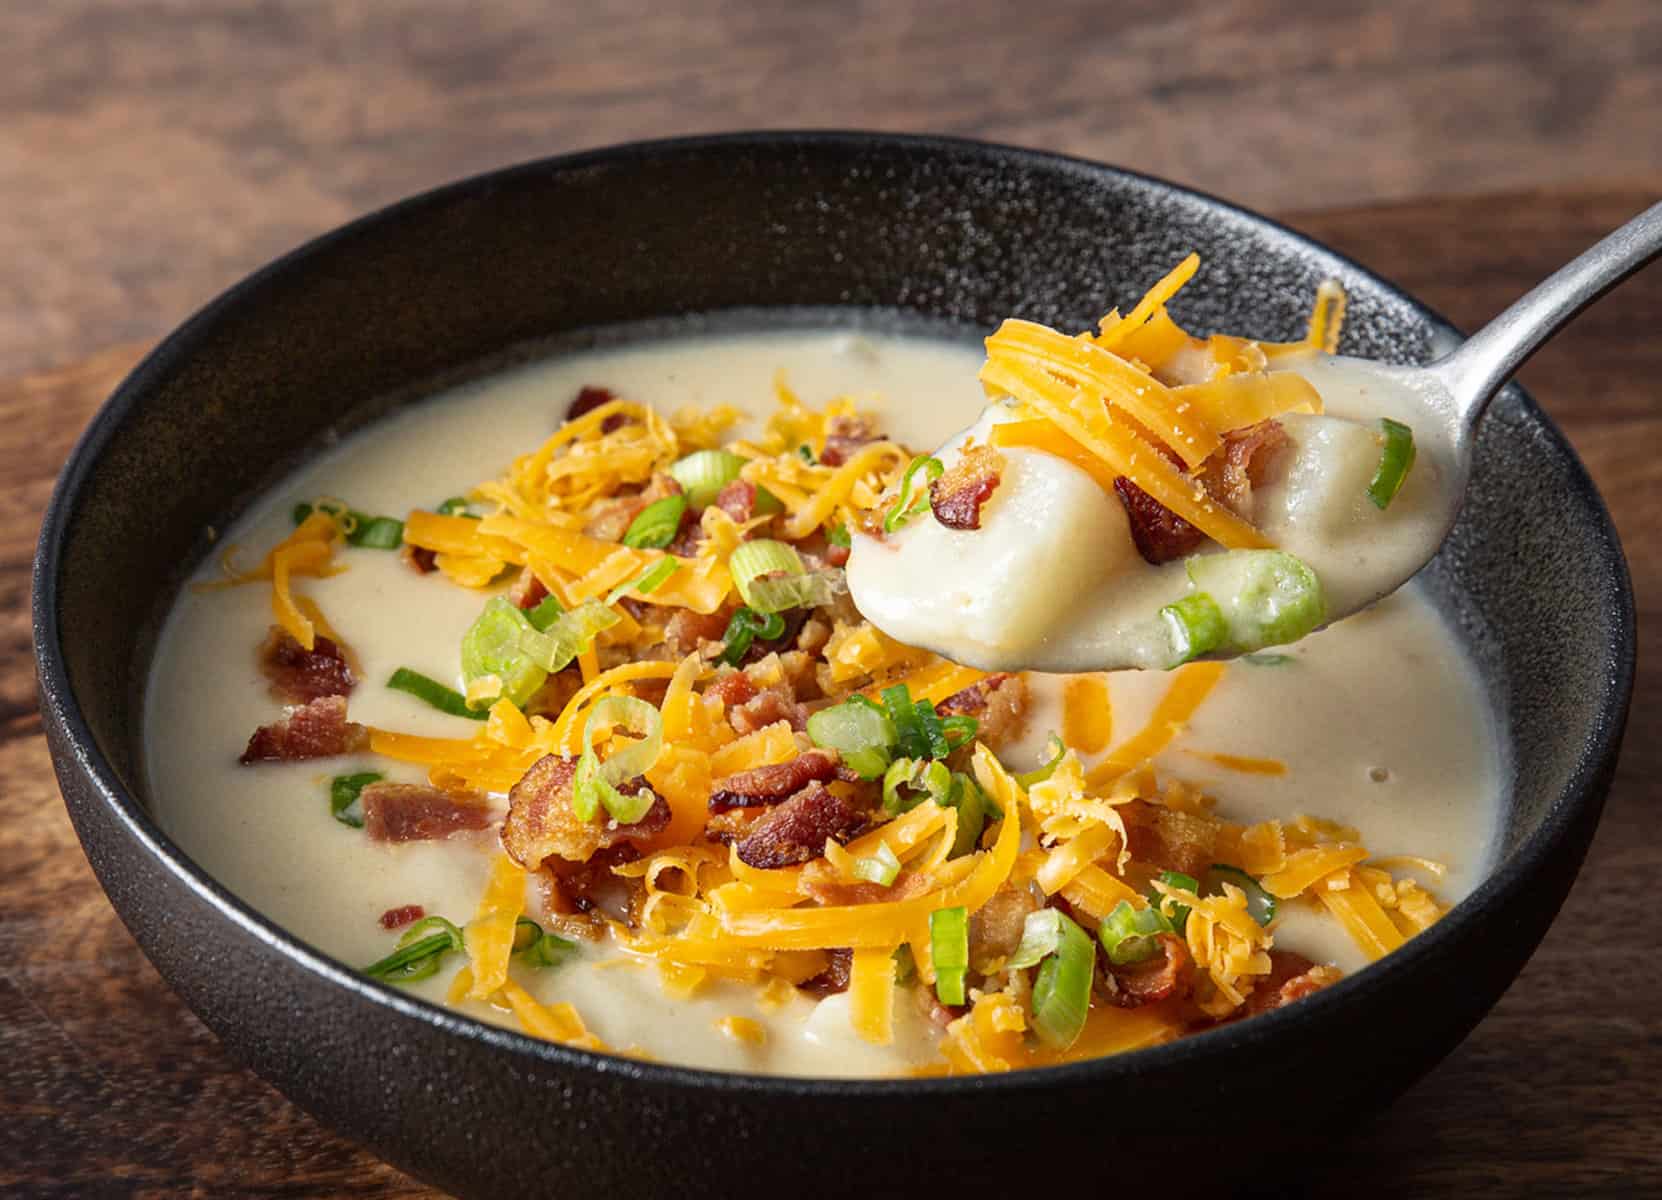 Instant Pot Potato Soup - The Salty Marshmallow